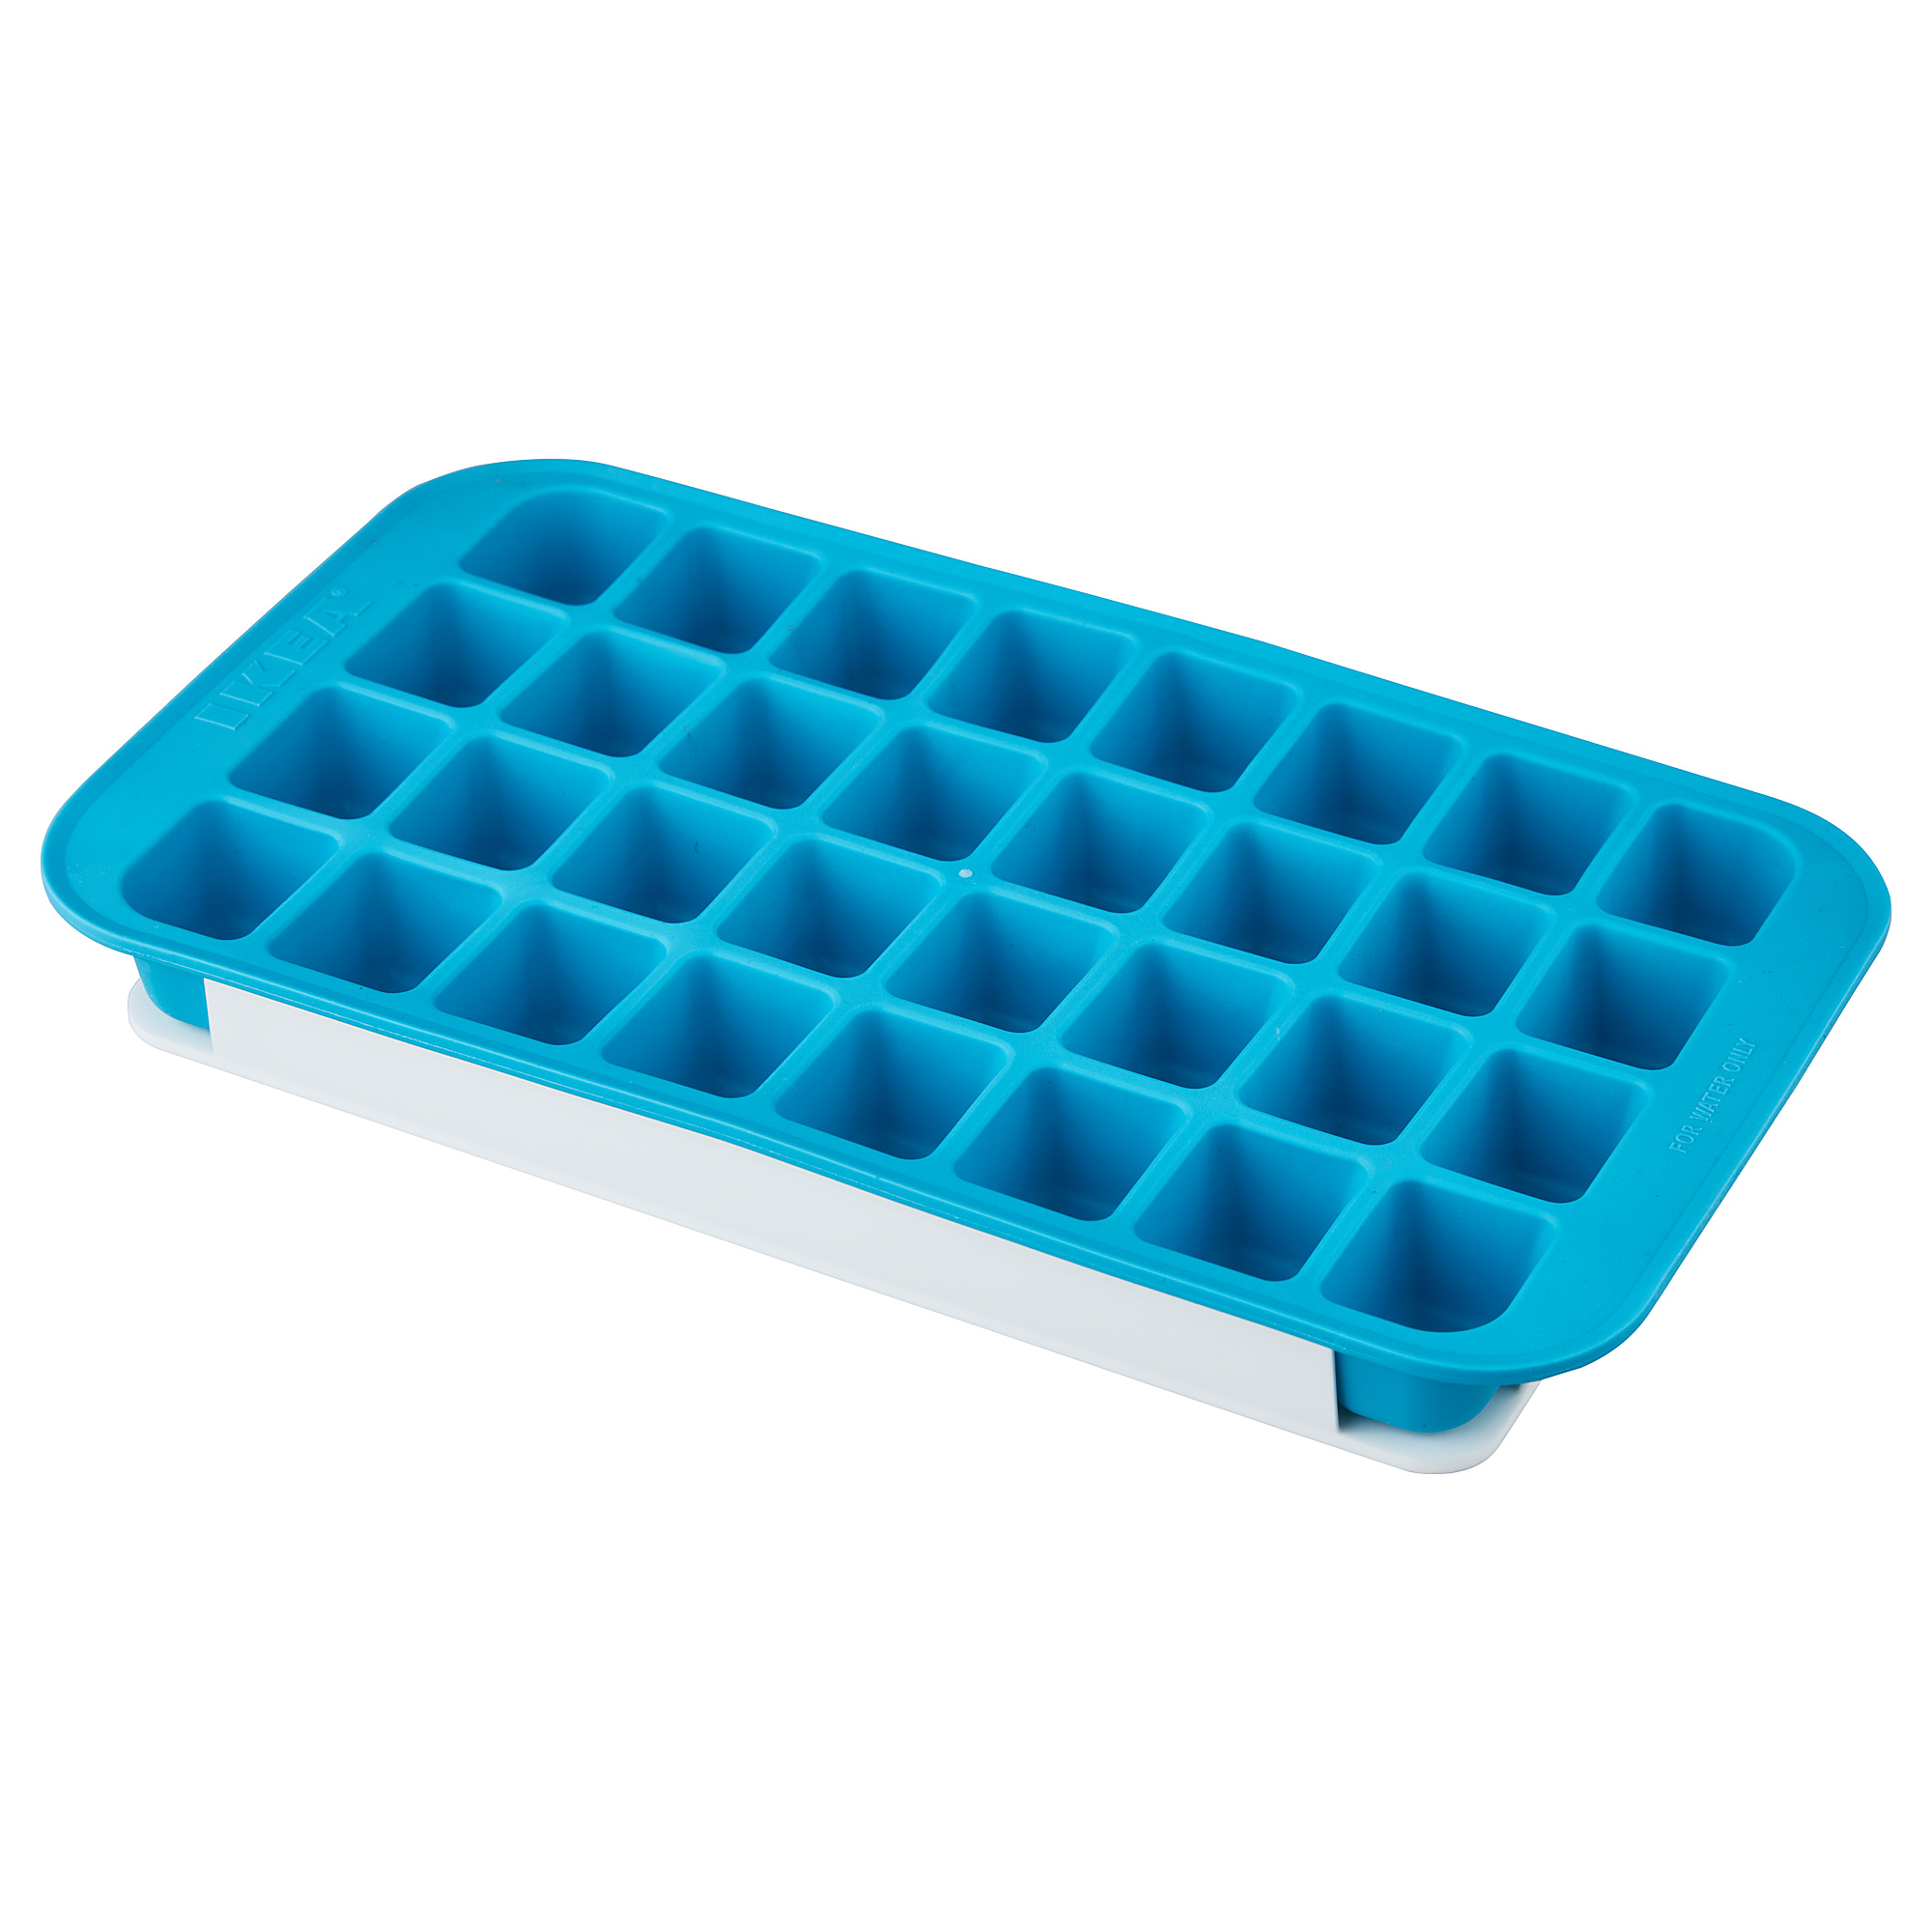 INBLANDAT ice cube tray